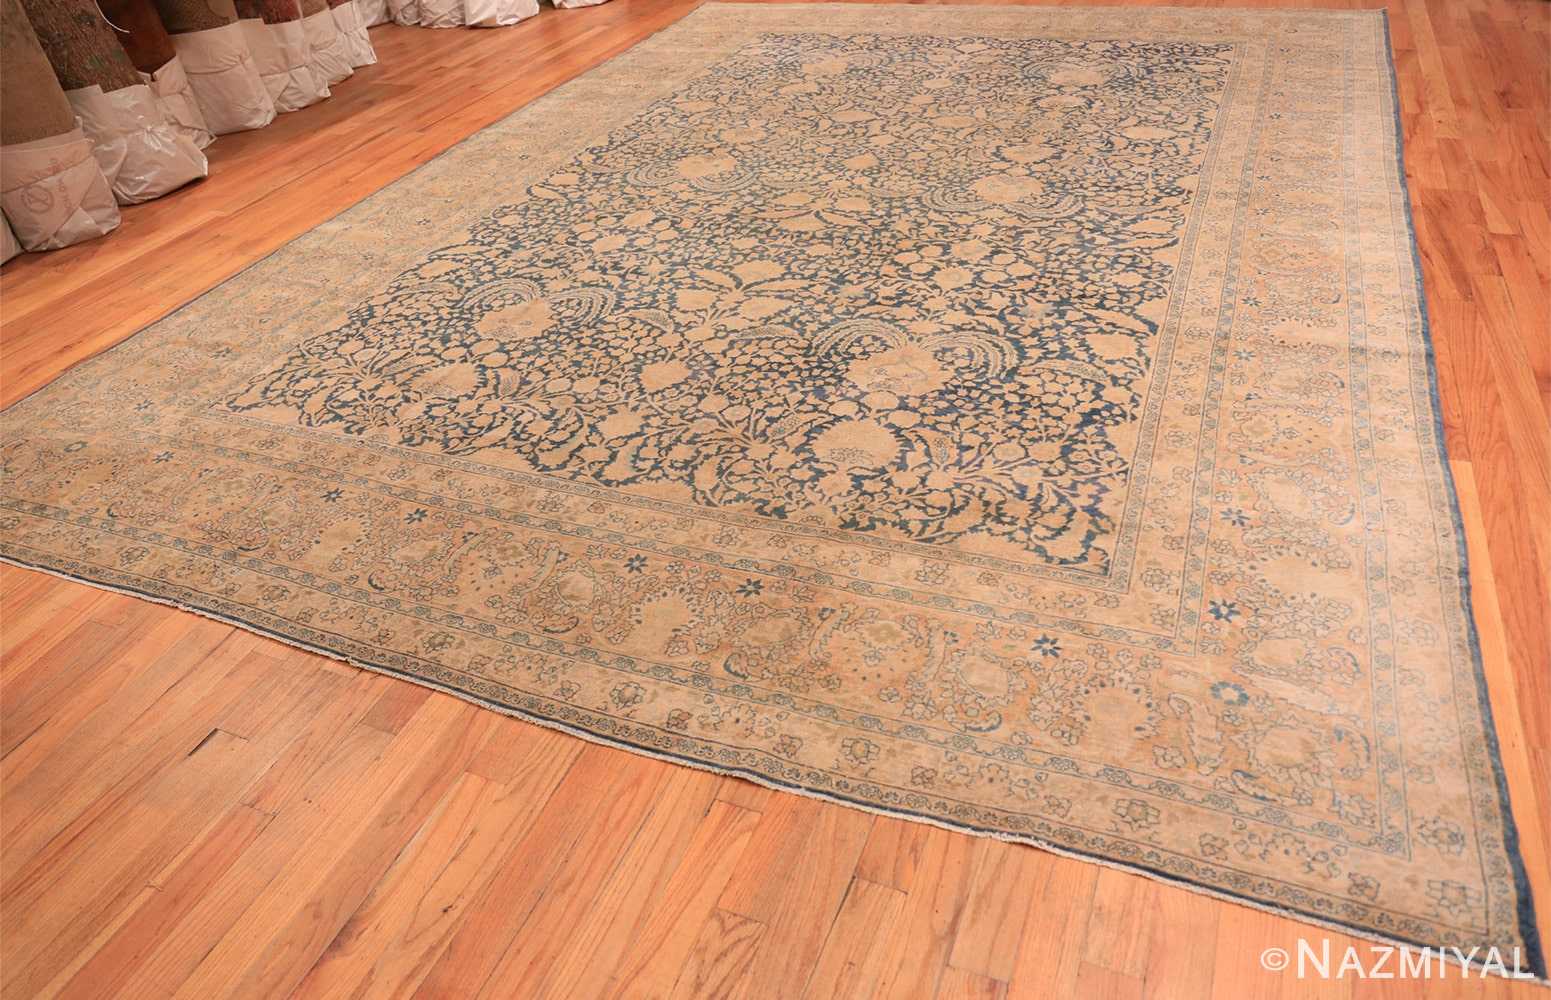 Full Antique Persian Khorassan rug 49545 by Nazmiyal